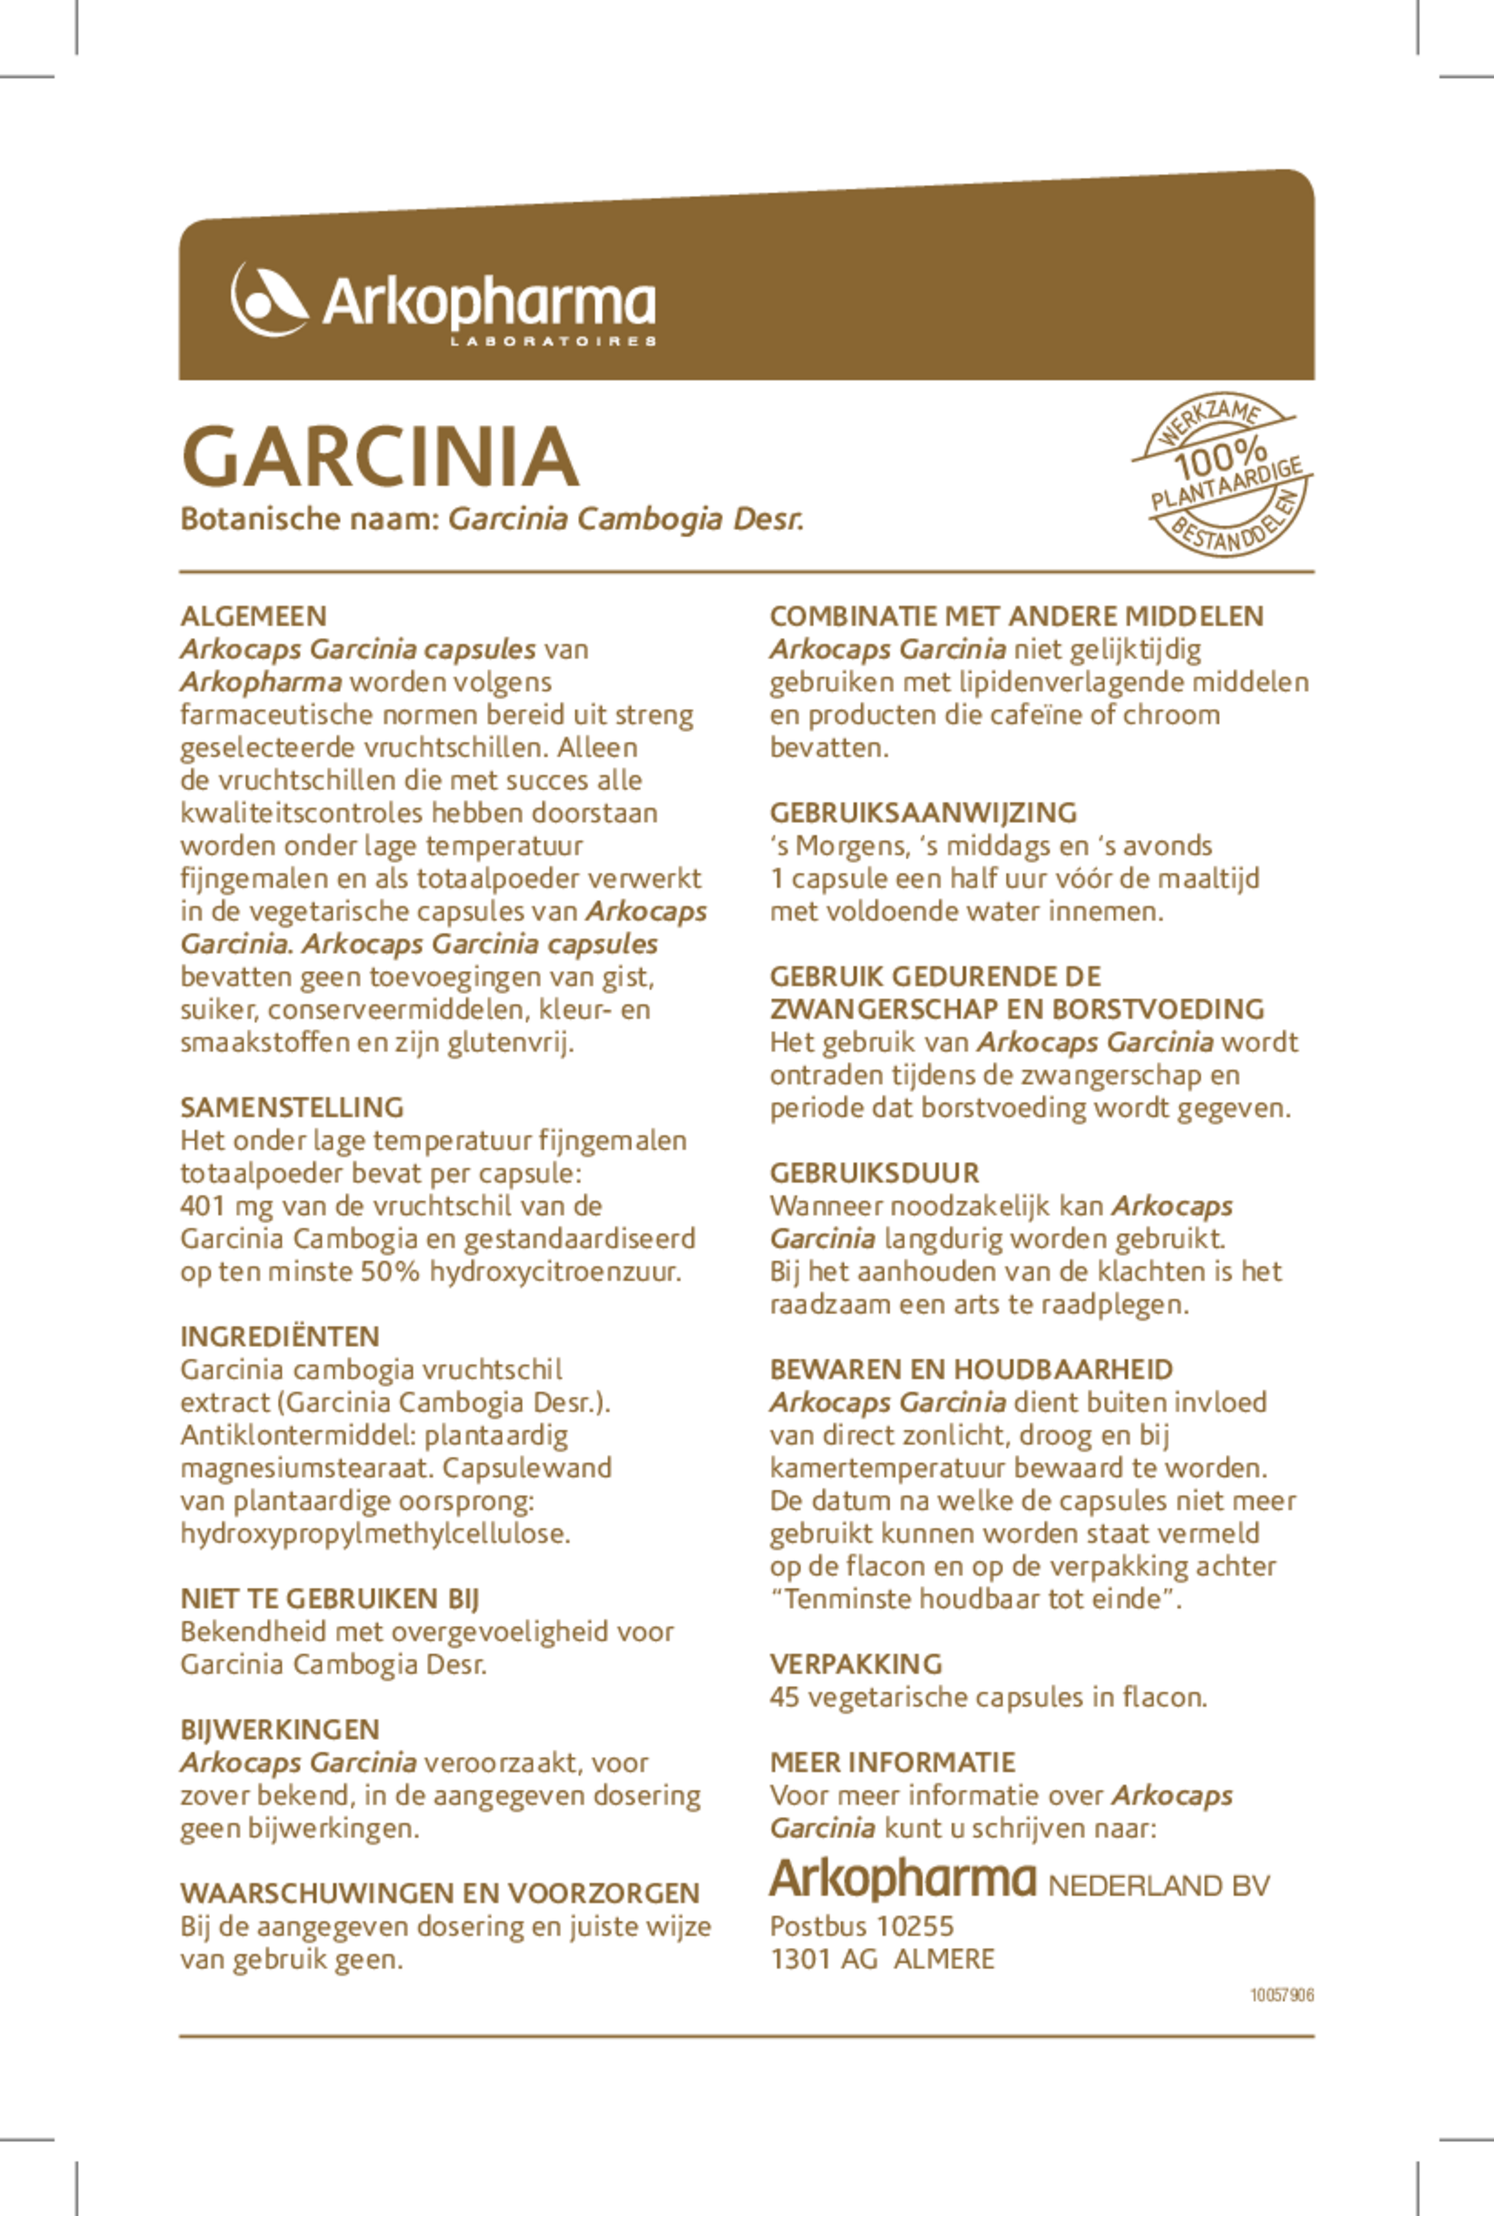 Garcinia Capsules afbeelding van document #1, gebruiksaanwijzing